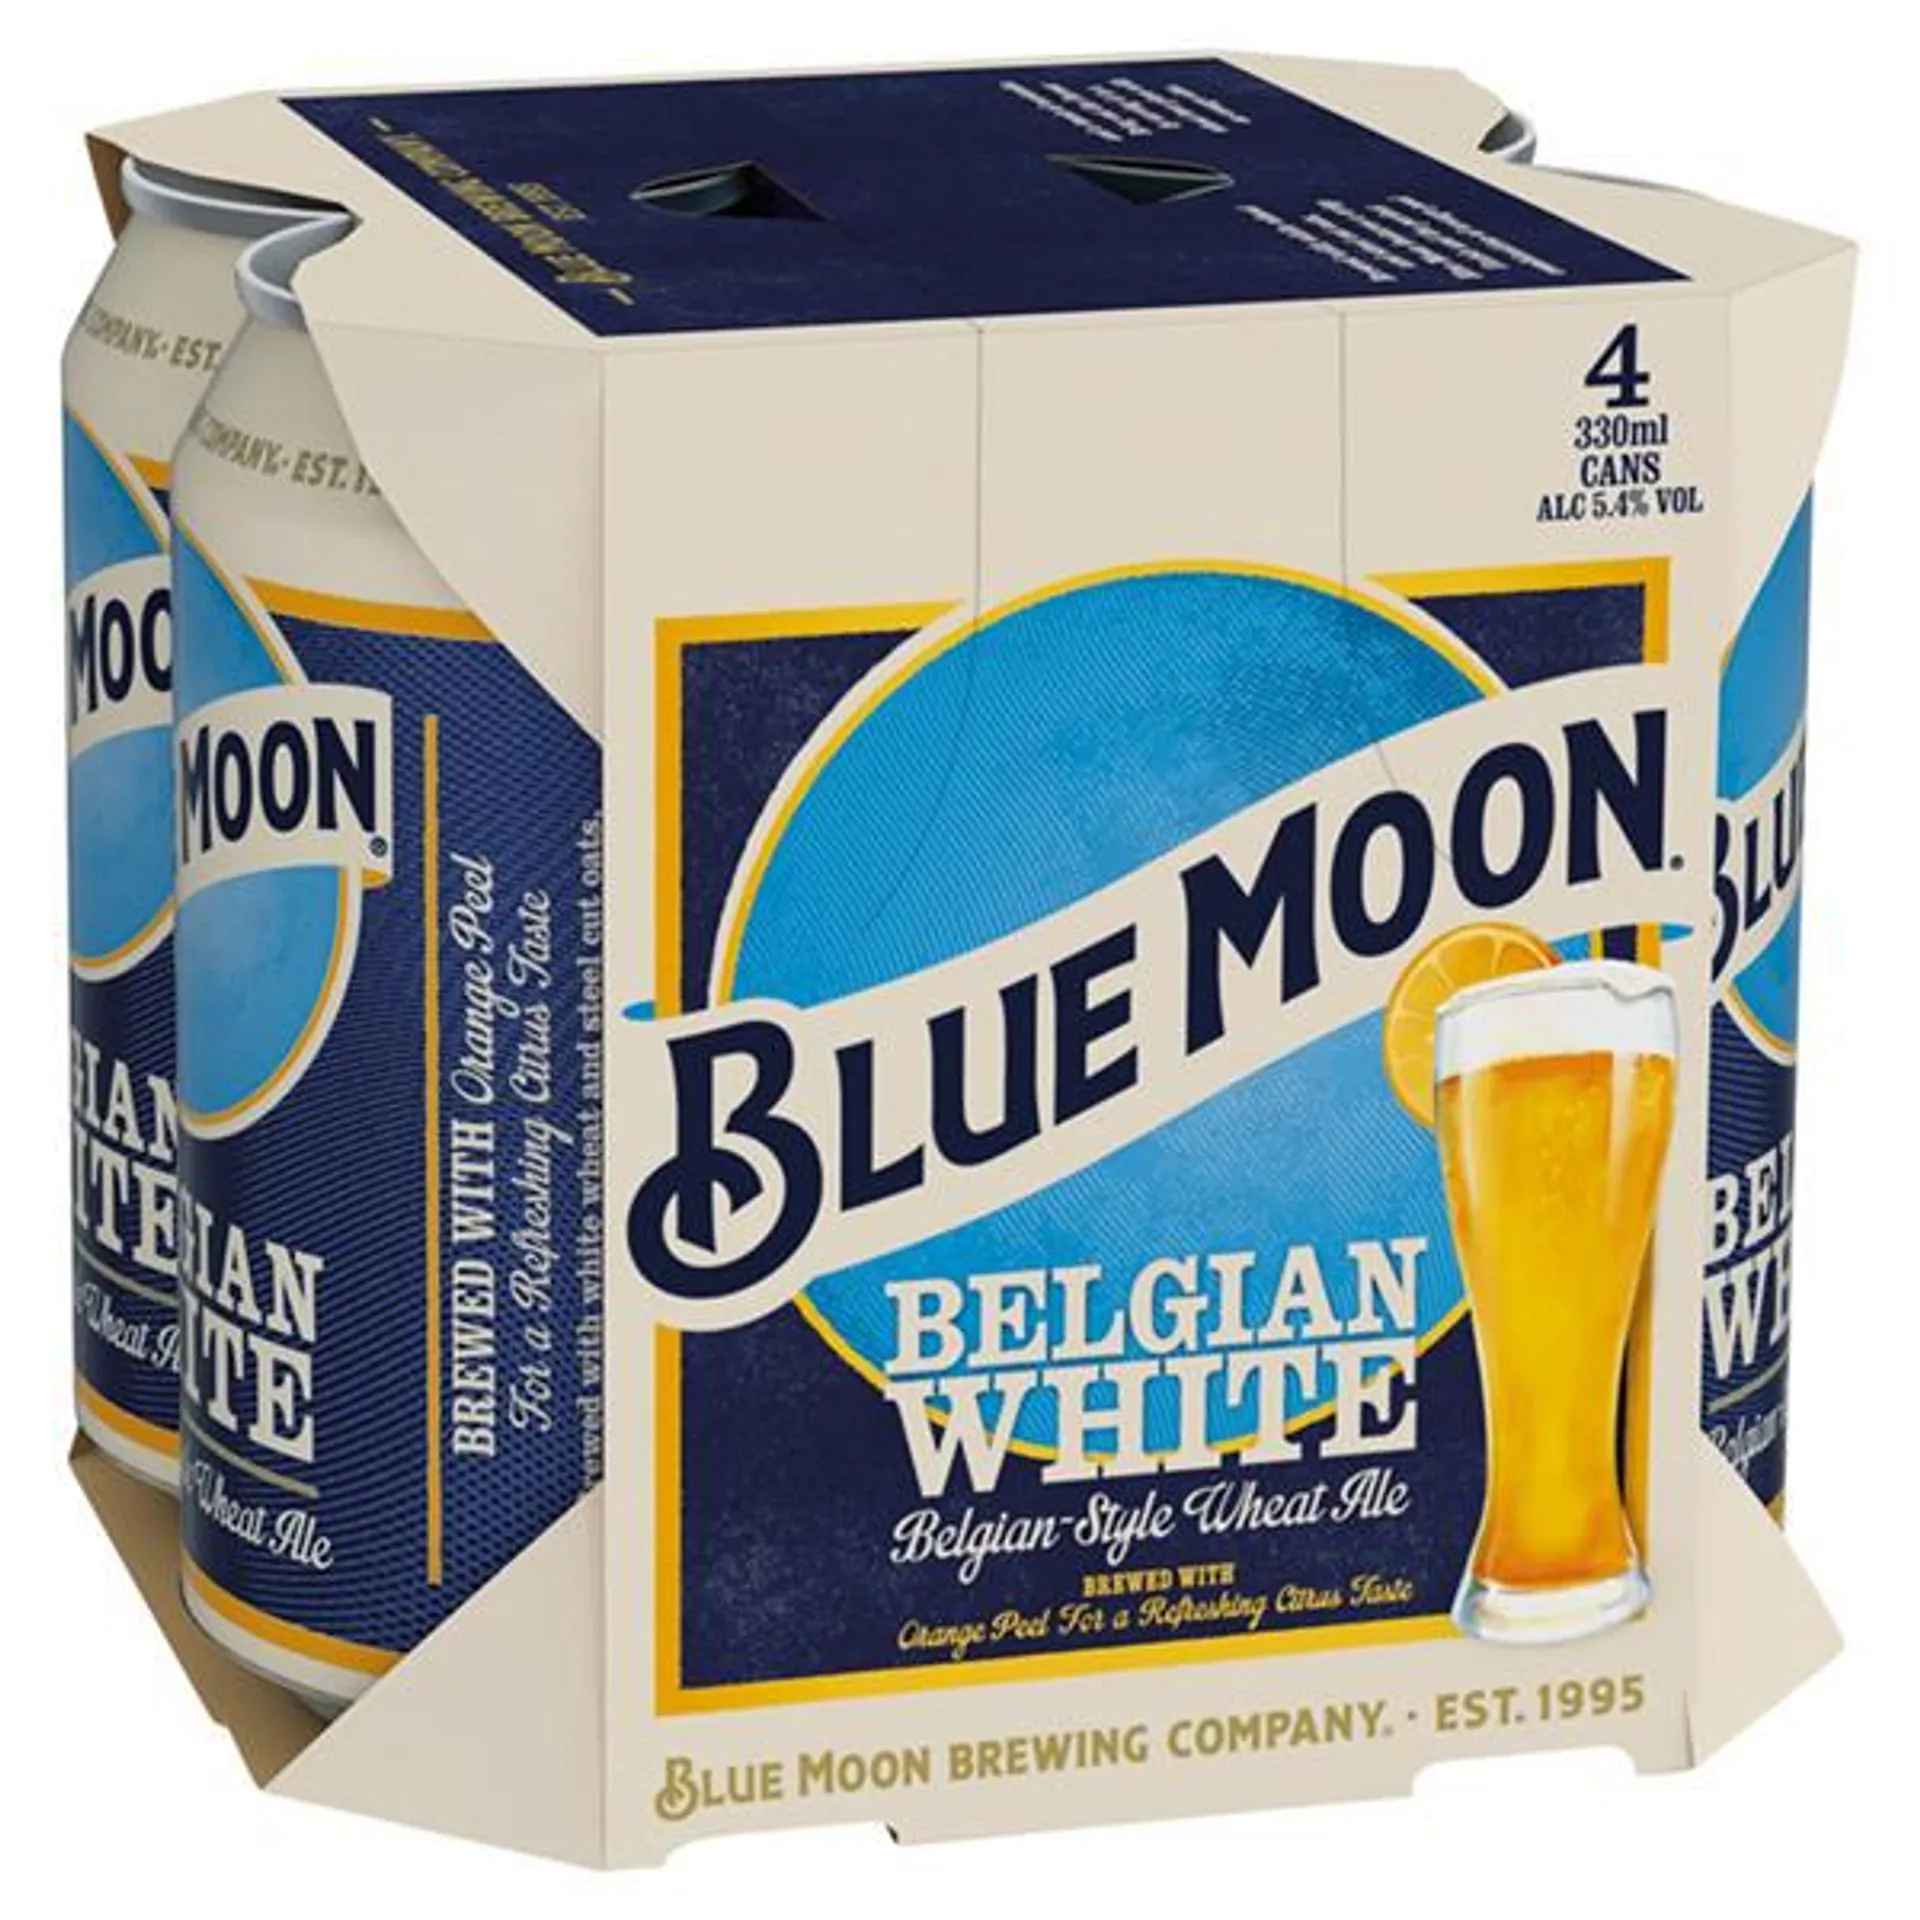 Belgian White American Craft Wheat Beer 4 x 330ml